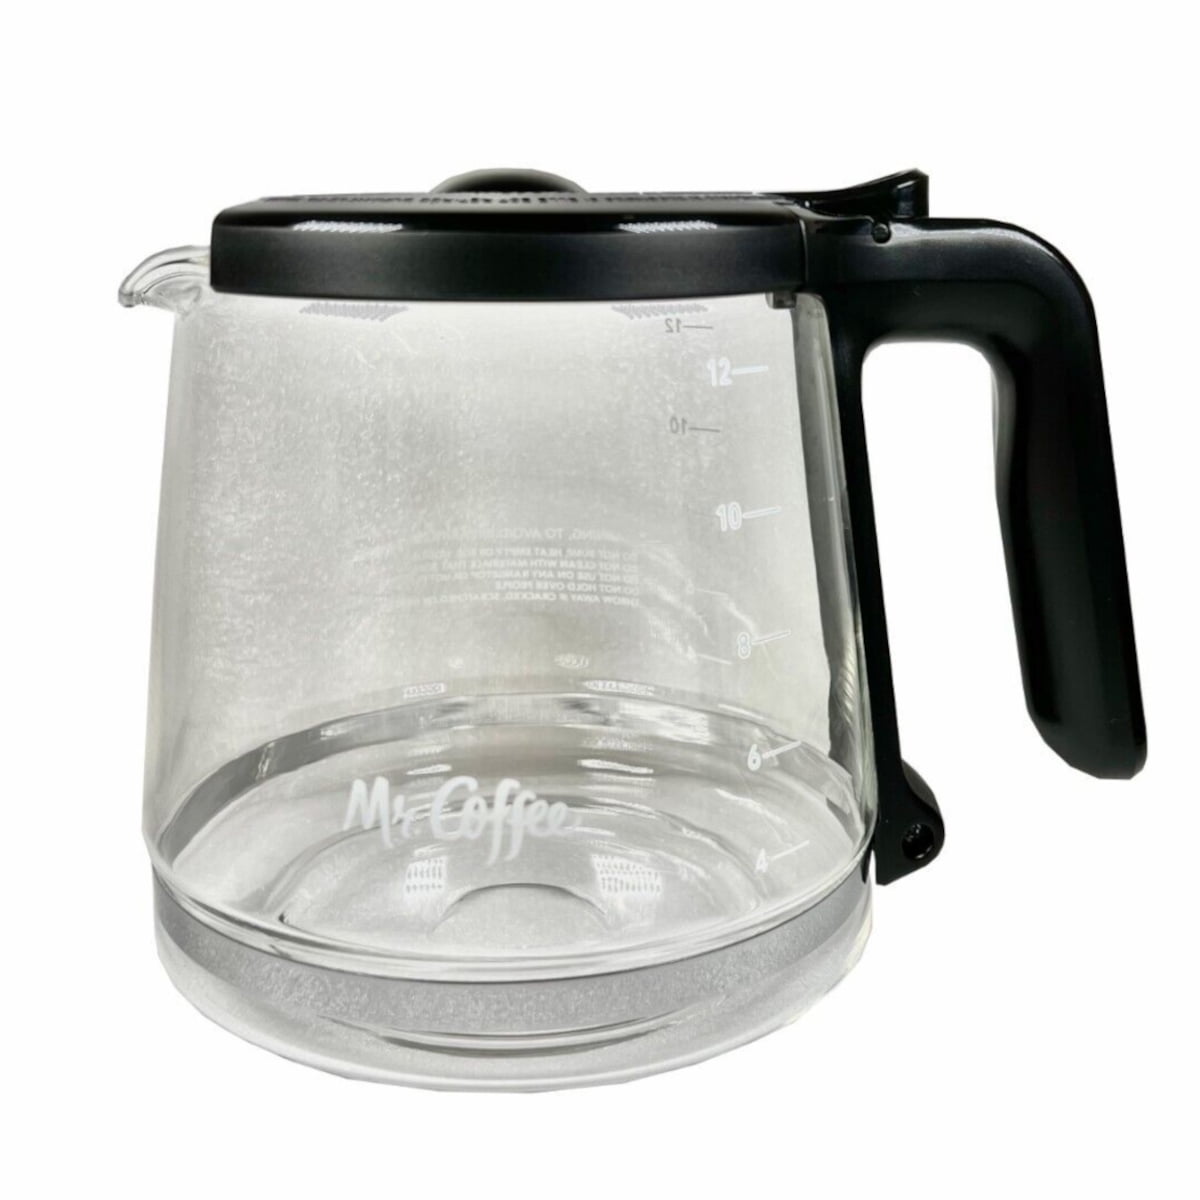 Genuine 12 Cup Mr. Coffee Carafe FT & IS Series Black ISD13 - Seneca River  Trading, Inc.